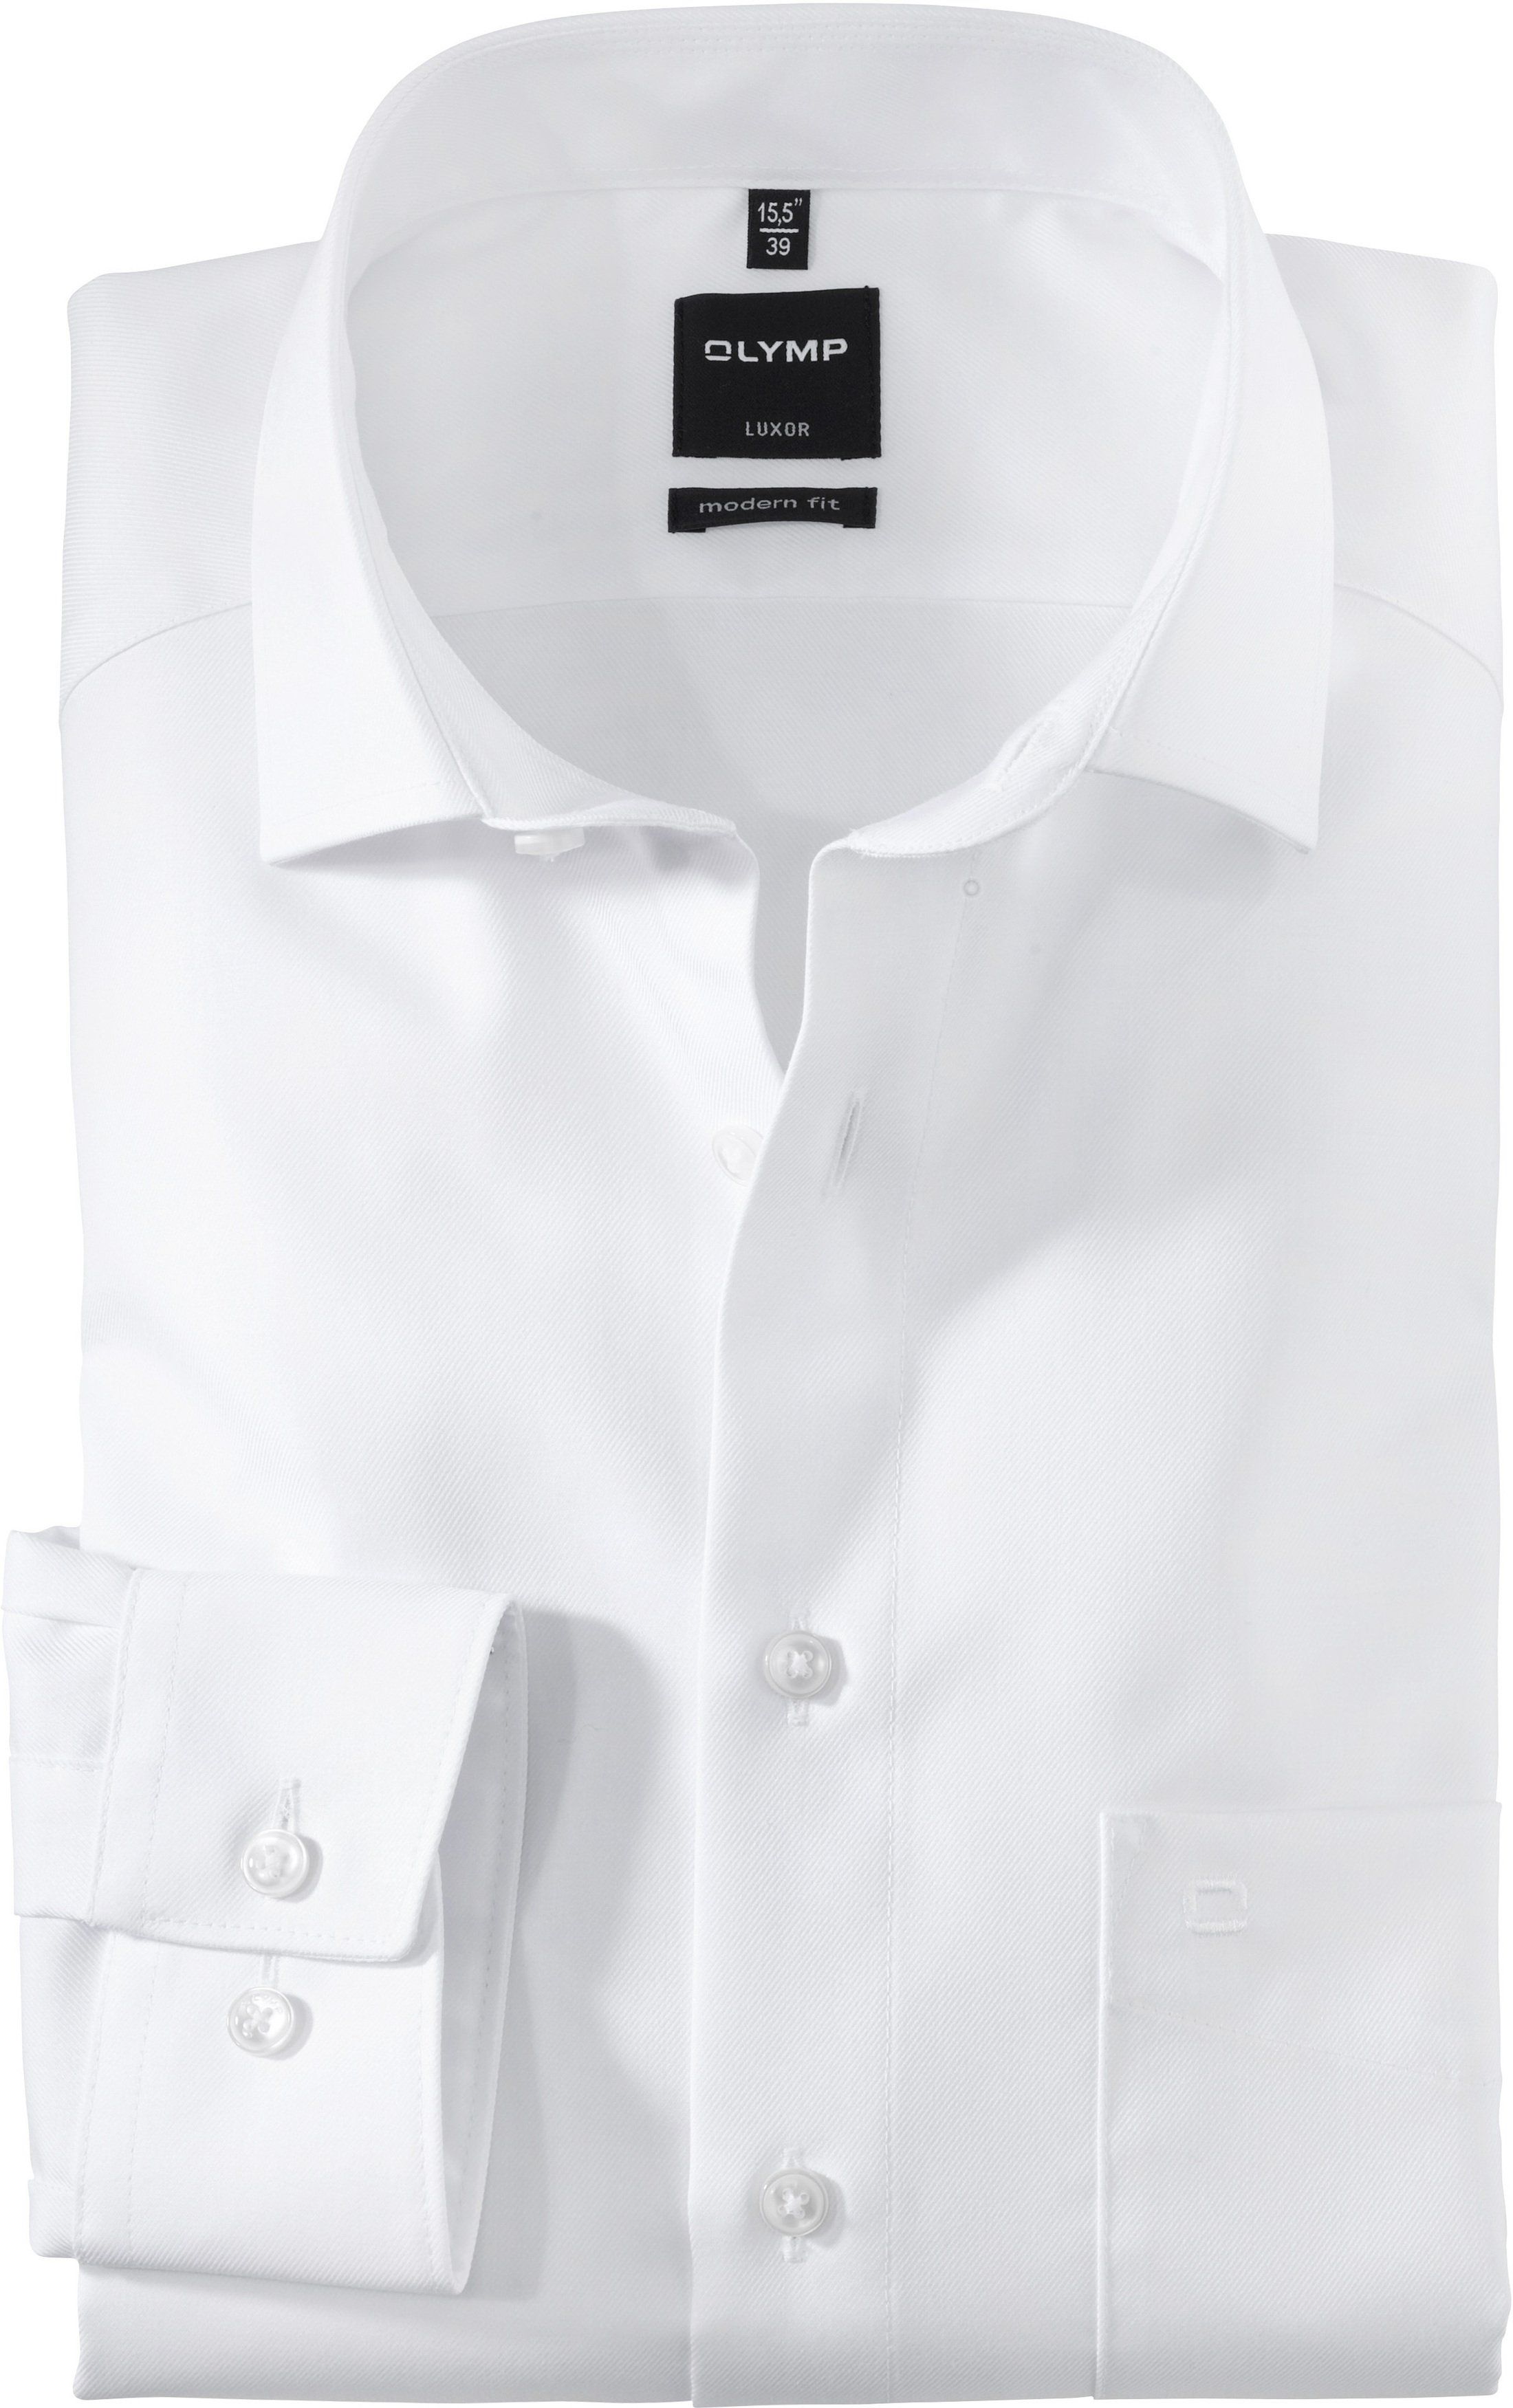 OLYMP Cotton Shirt Luxor White size 16